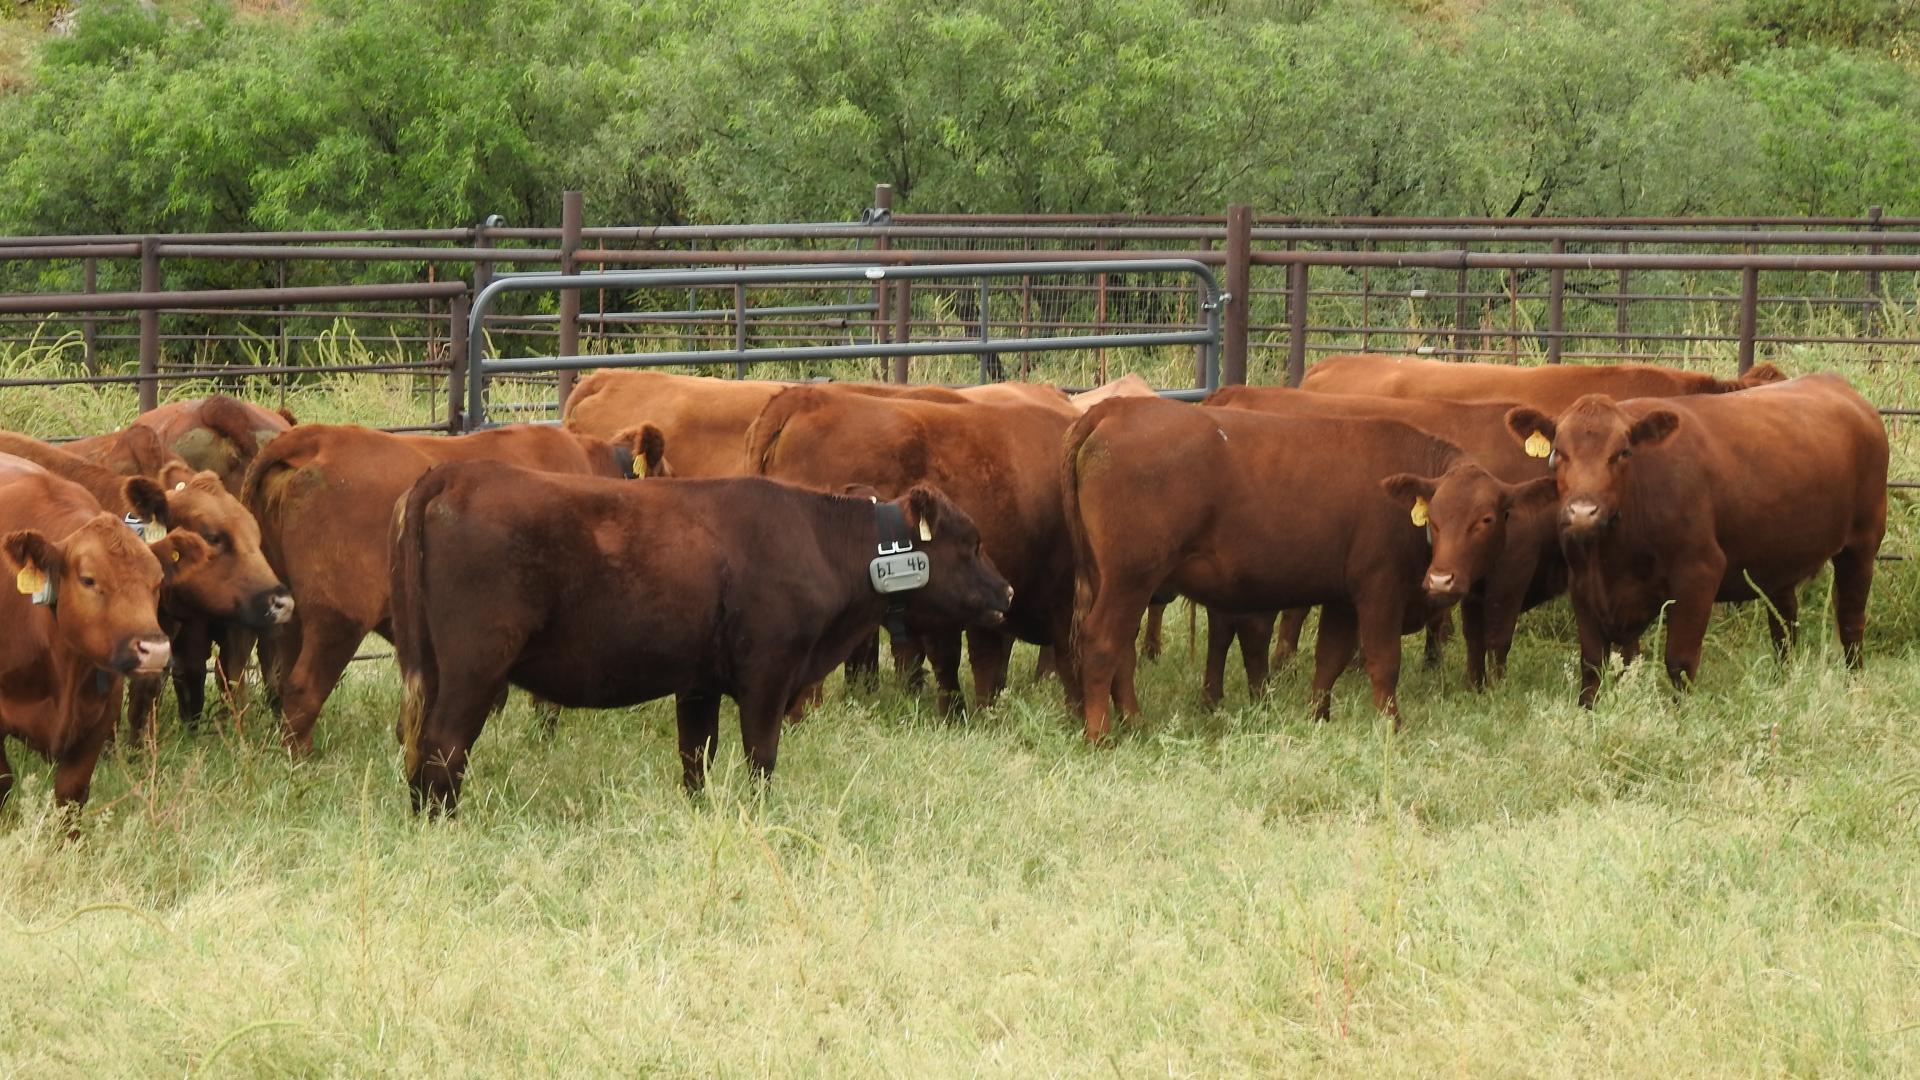 Collared Cattle in grazing study on Santa Rita Ranch in Arizona